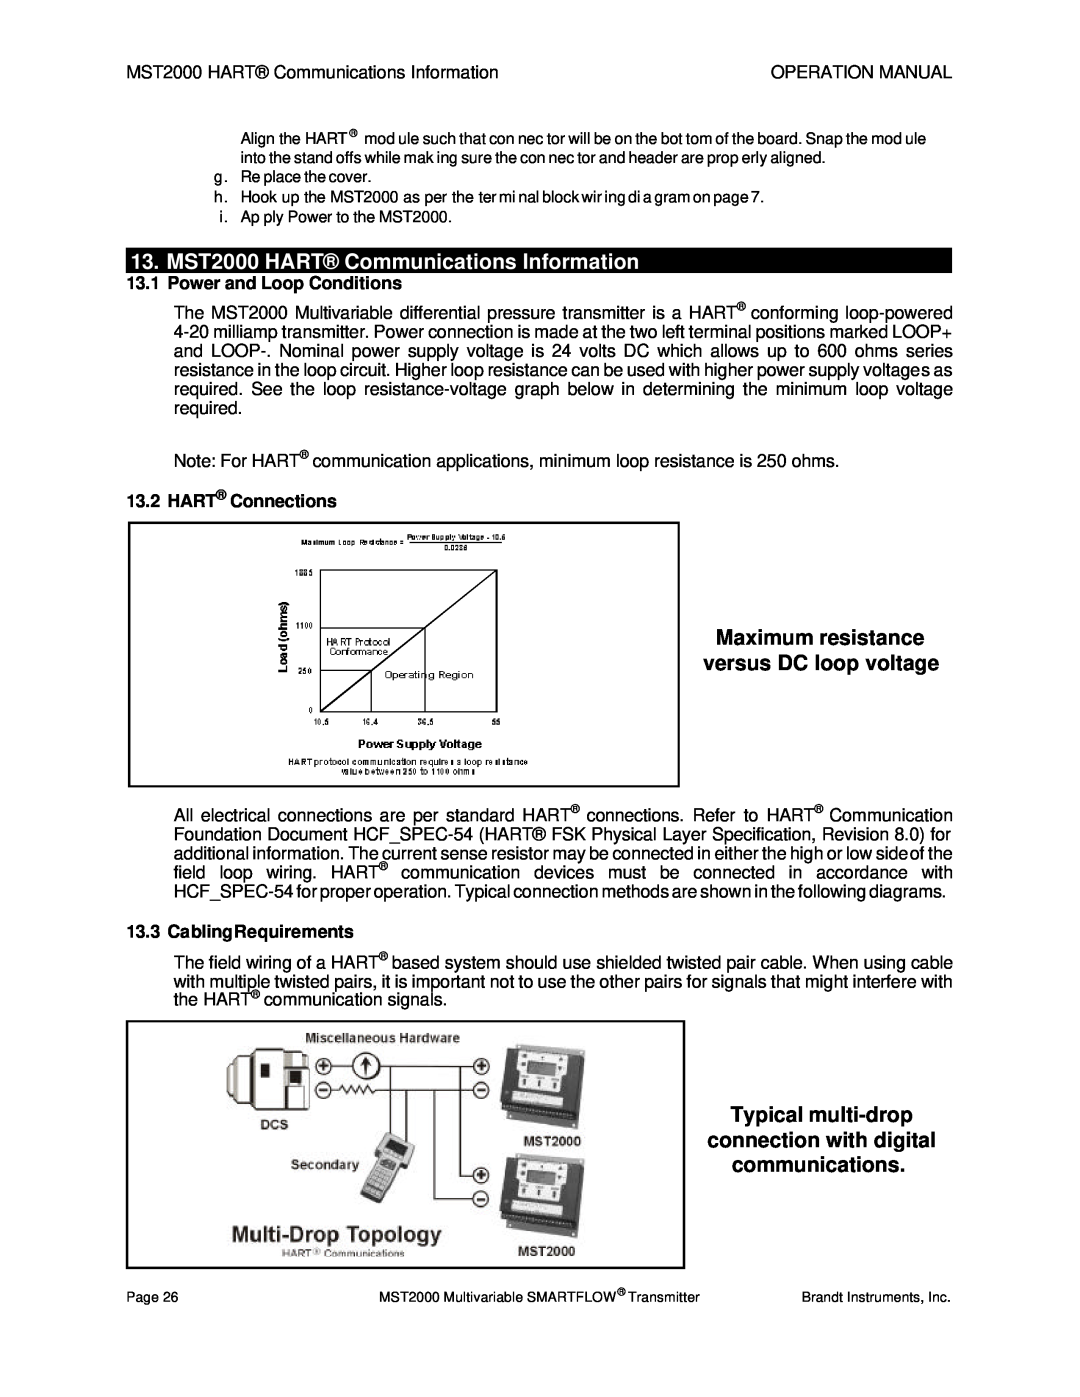 Tamron 13.MST2000 HART Communications Information, Maximum resistance versus DC loop voltage, Typical multi-drop 